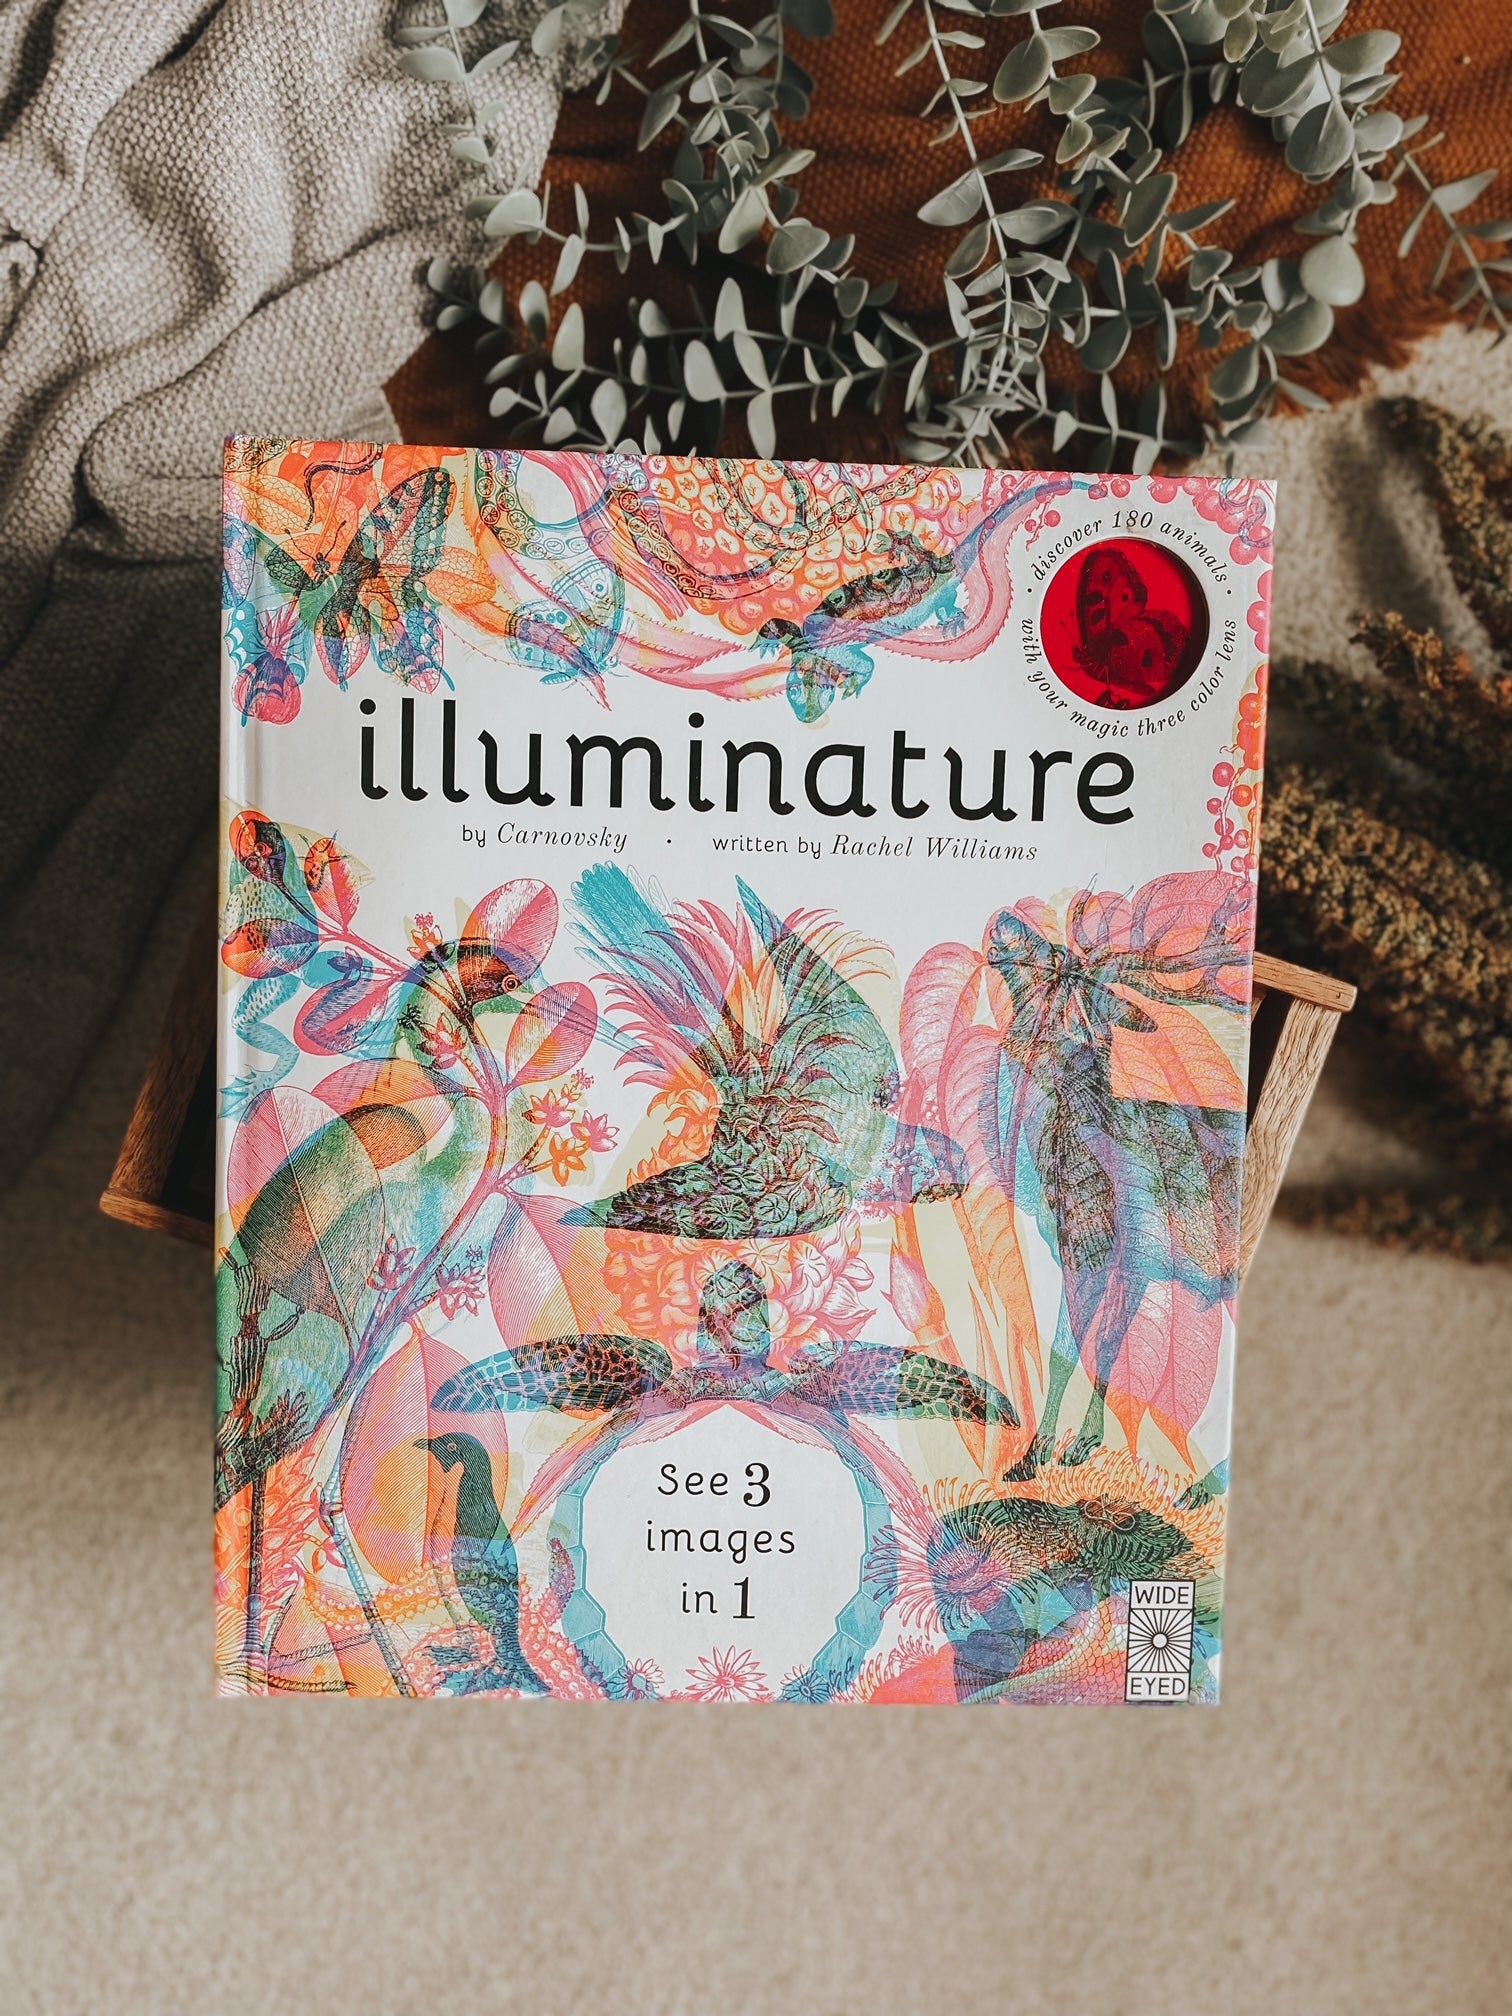 Illuminature: Discover 180 Animals with Your Magic Three Colour Lens